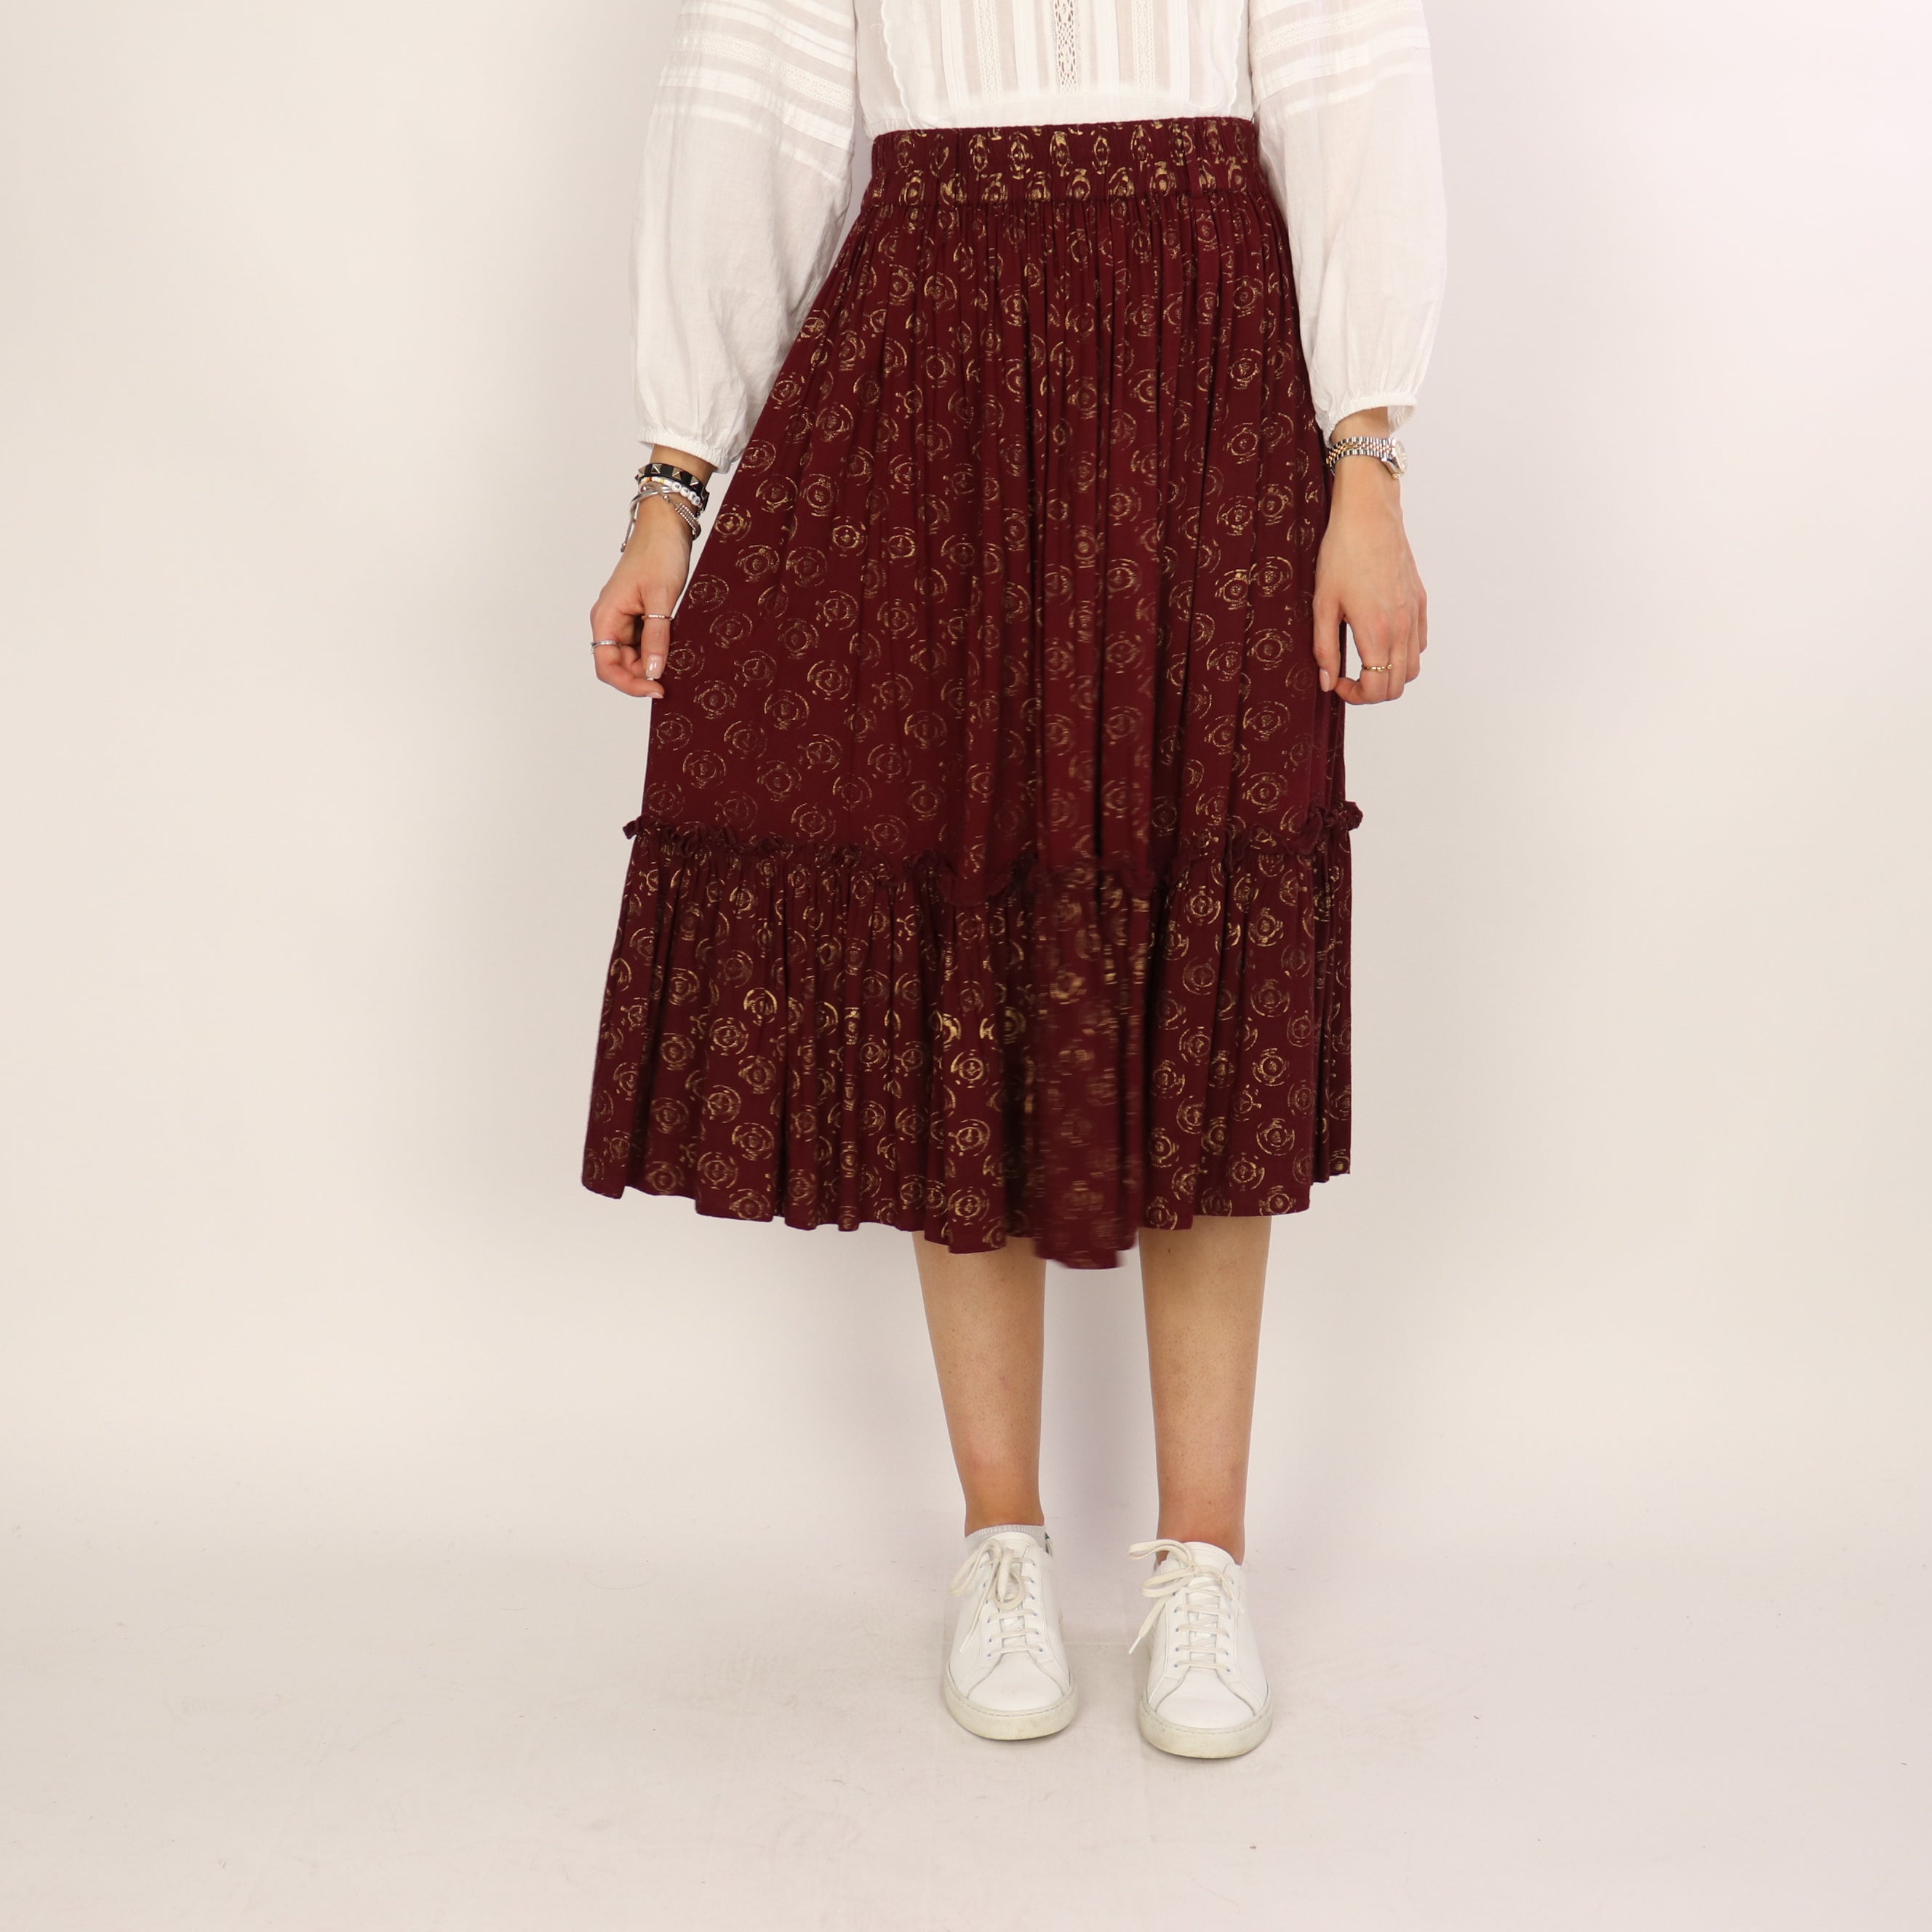 Skirt, Size 10